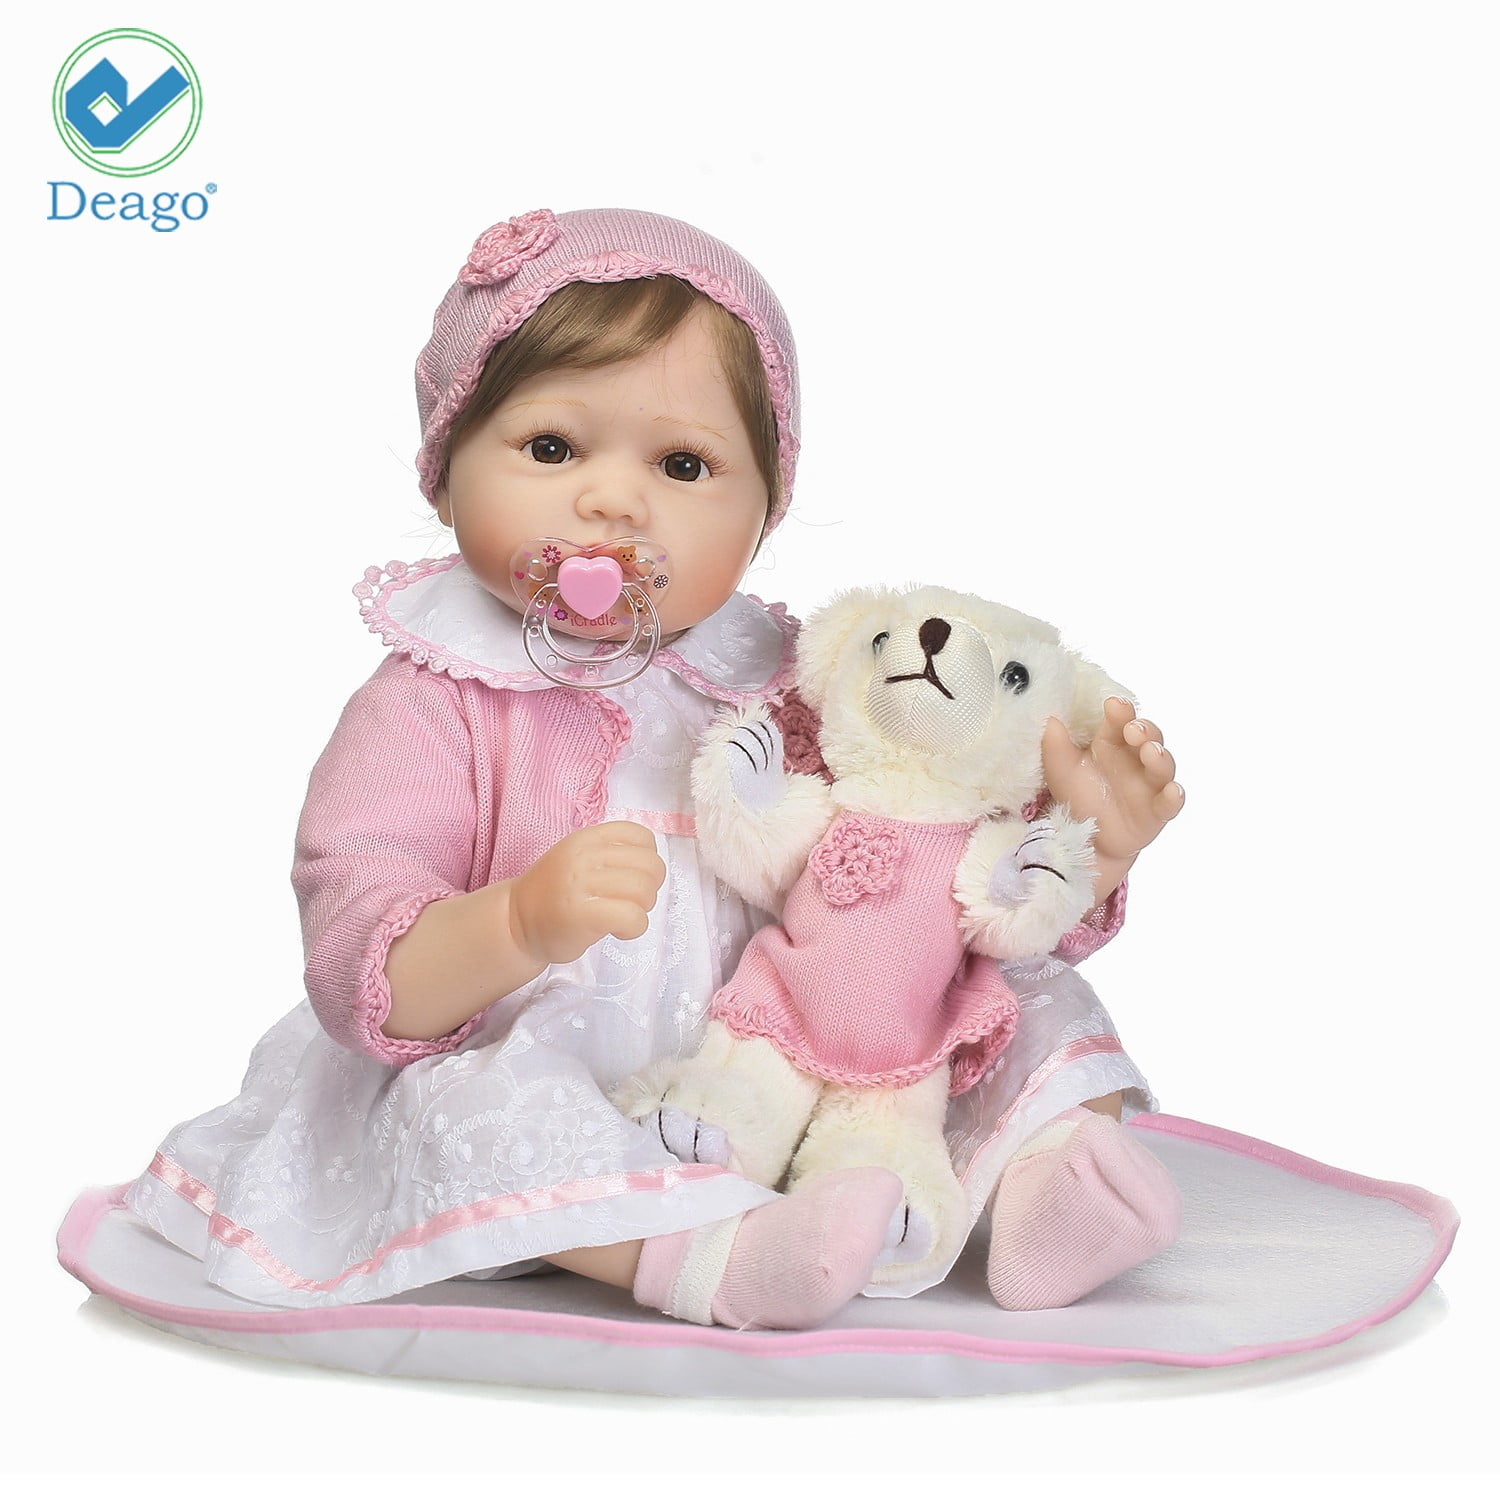 22" Vinyl Reborn Baby Dolls Lifelike Newborn Silicone Girl Doll Toy Xmas Gift 